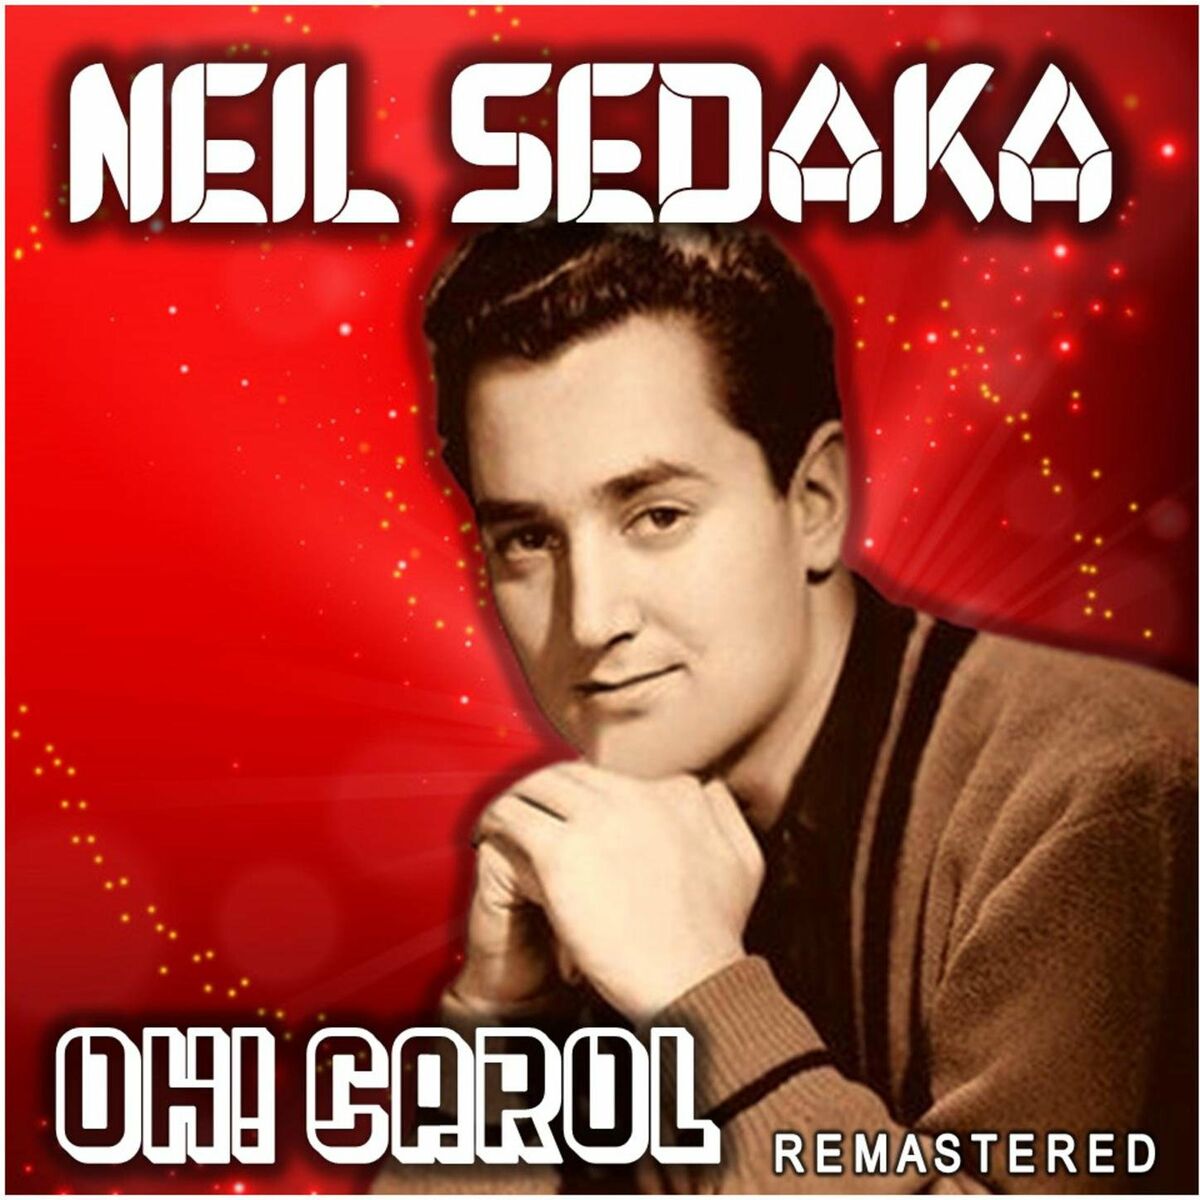 Neil Sedaka - Oh! Carol (Remastered): lyrics and songs | Deezer